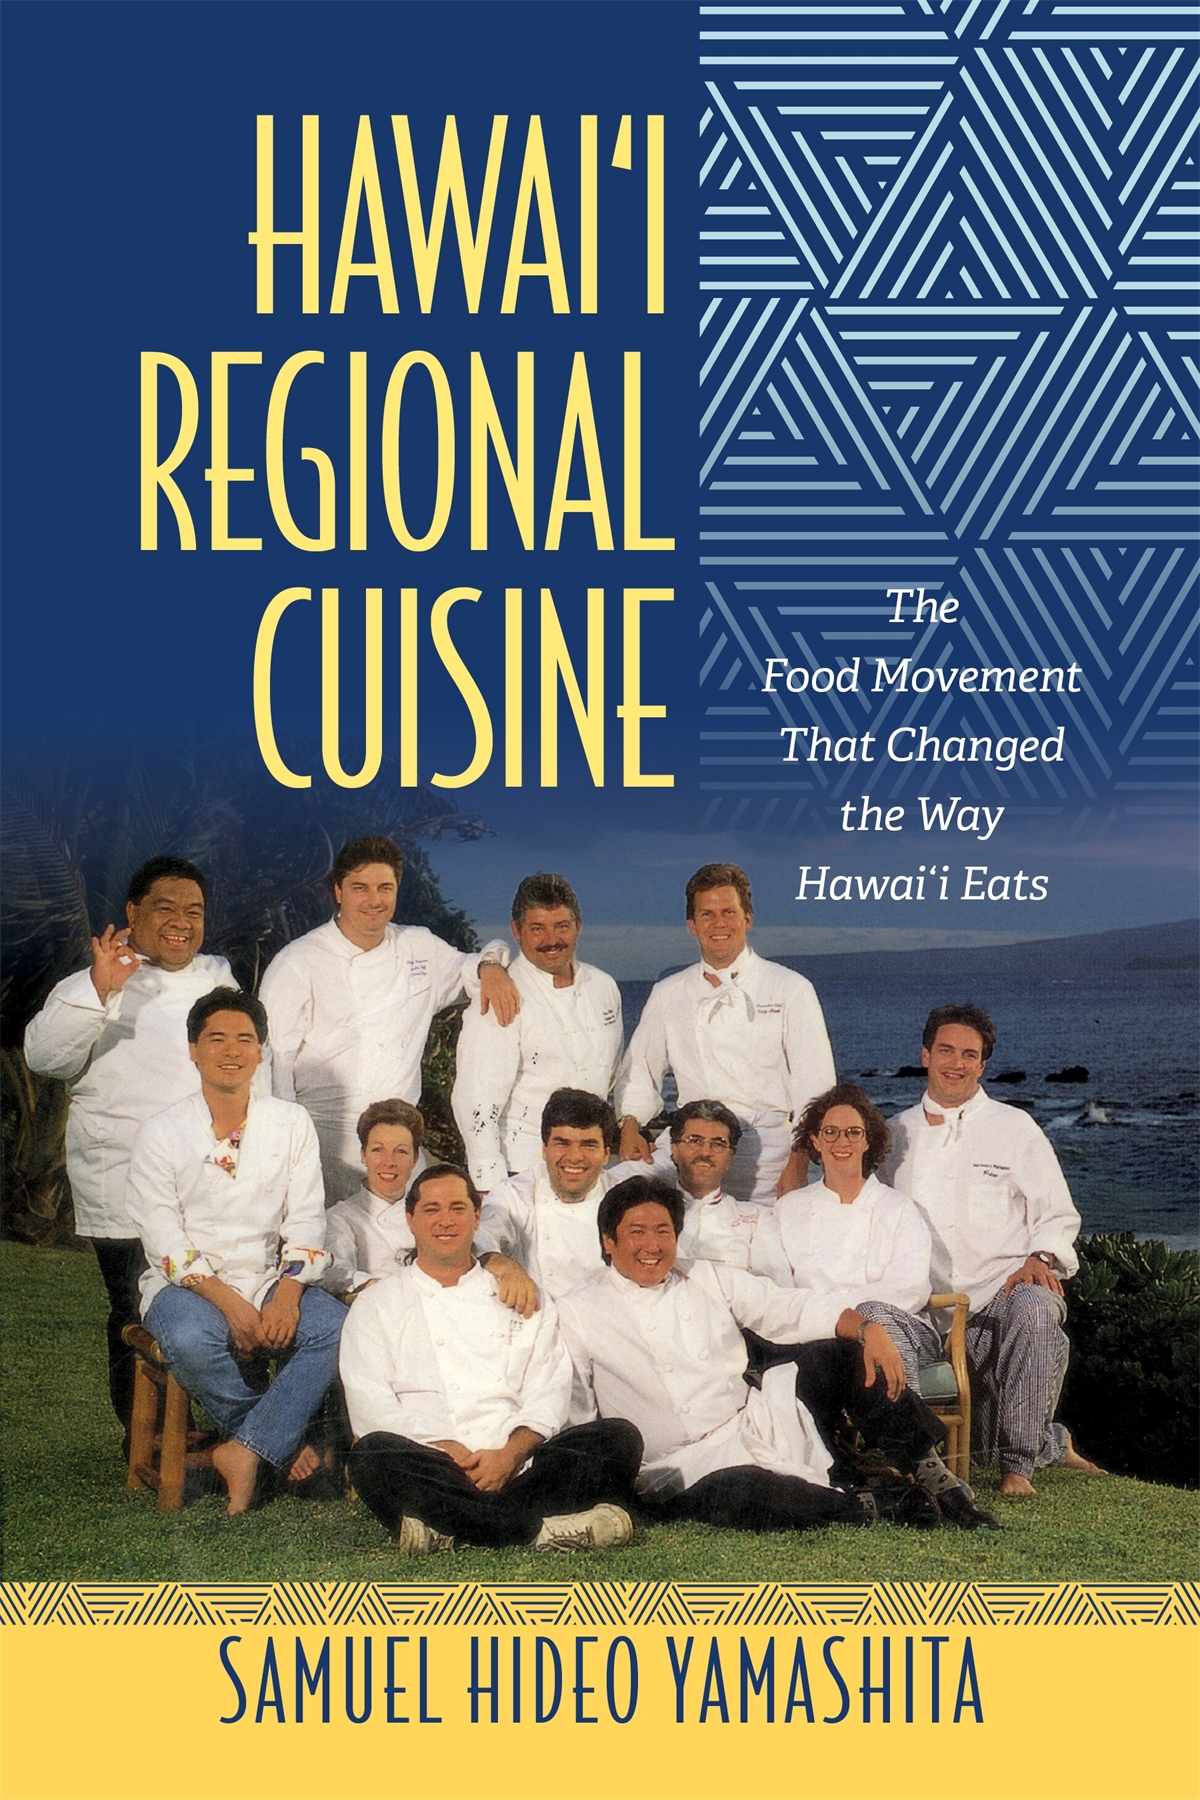 cover of book, Hawaii Regional Cuisine